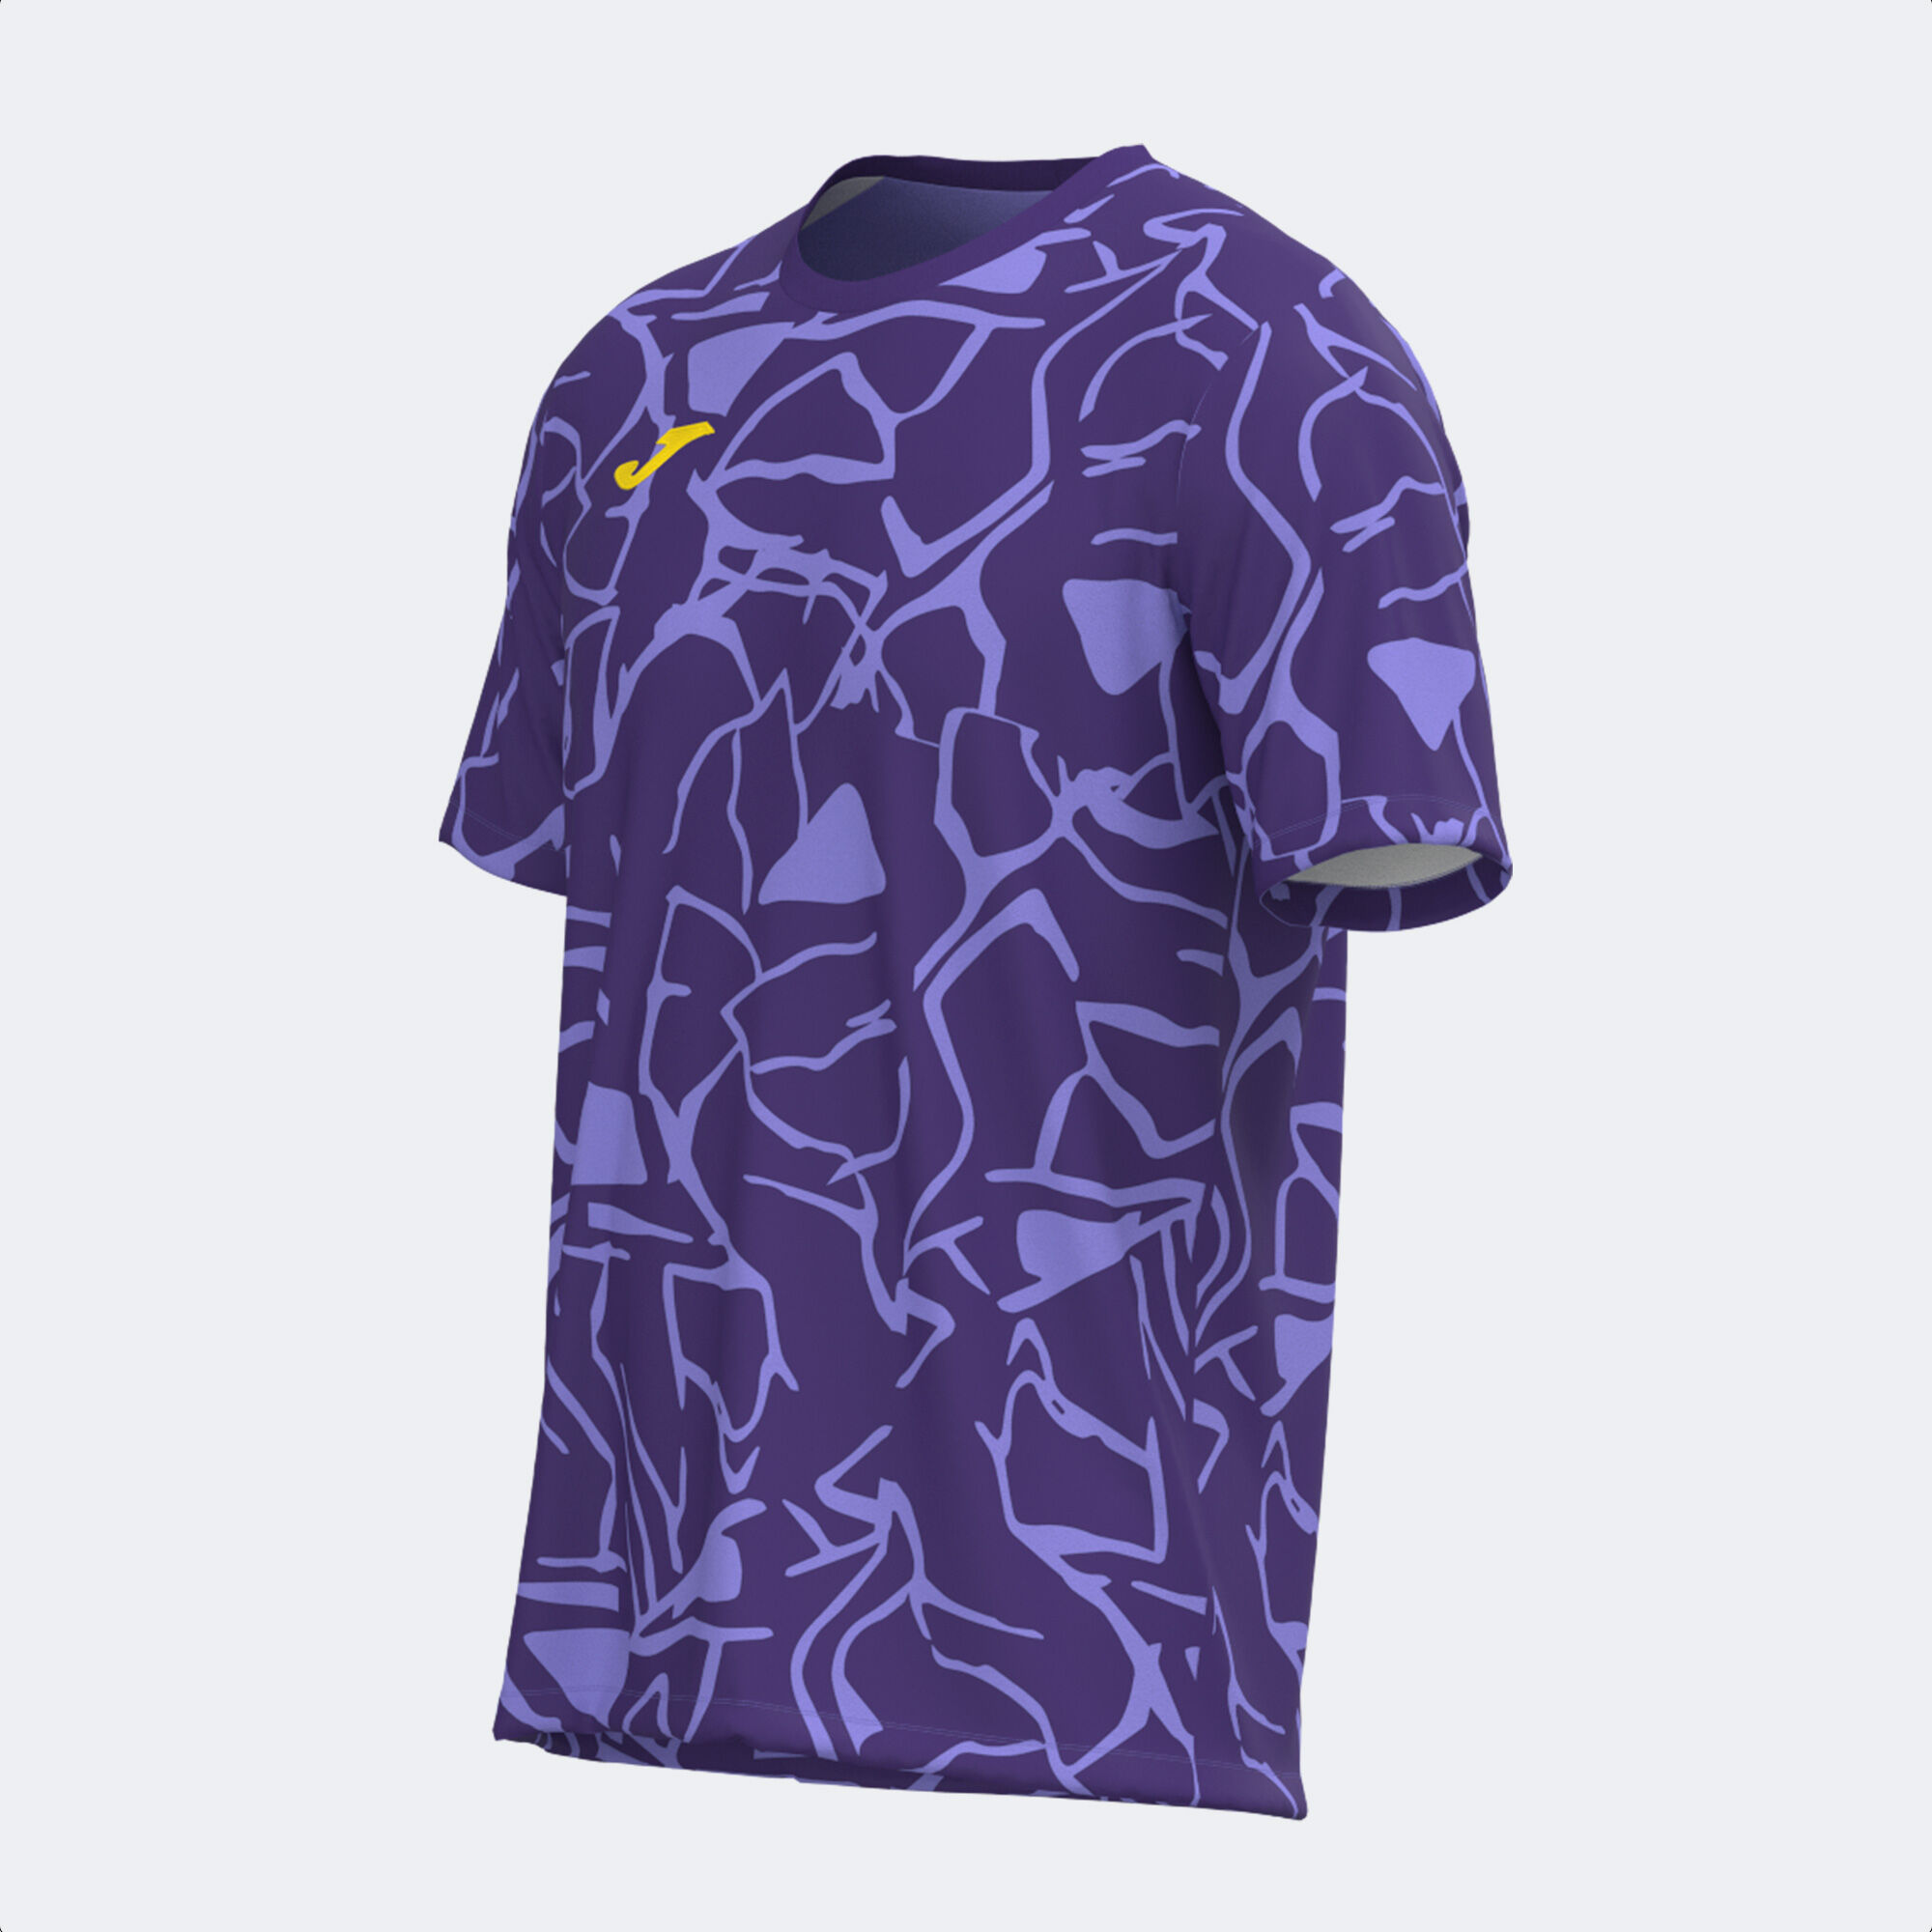 Camiseta manga corta hombre Pro team violeta